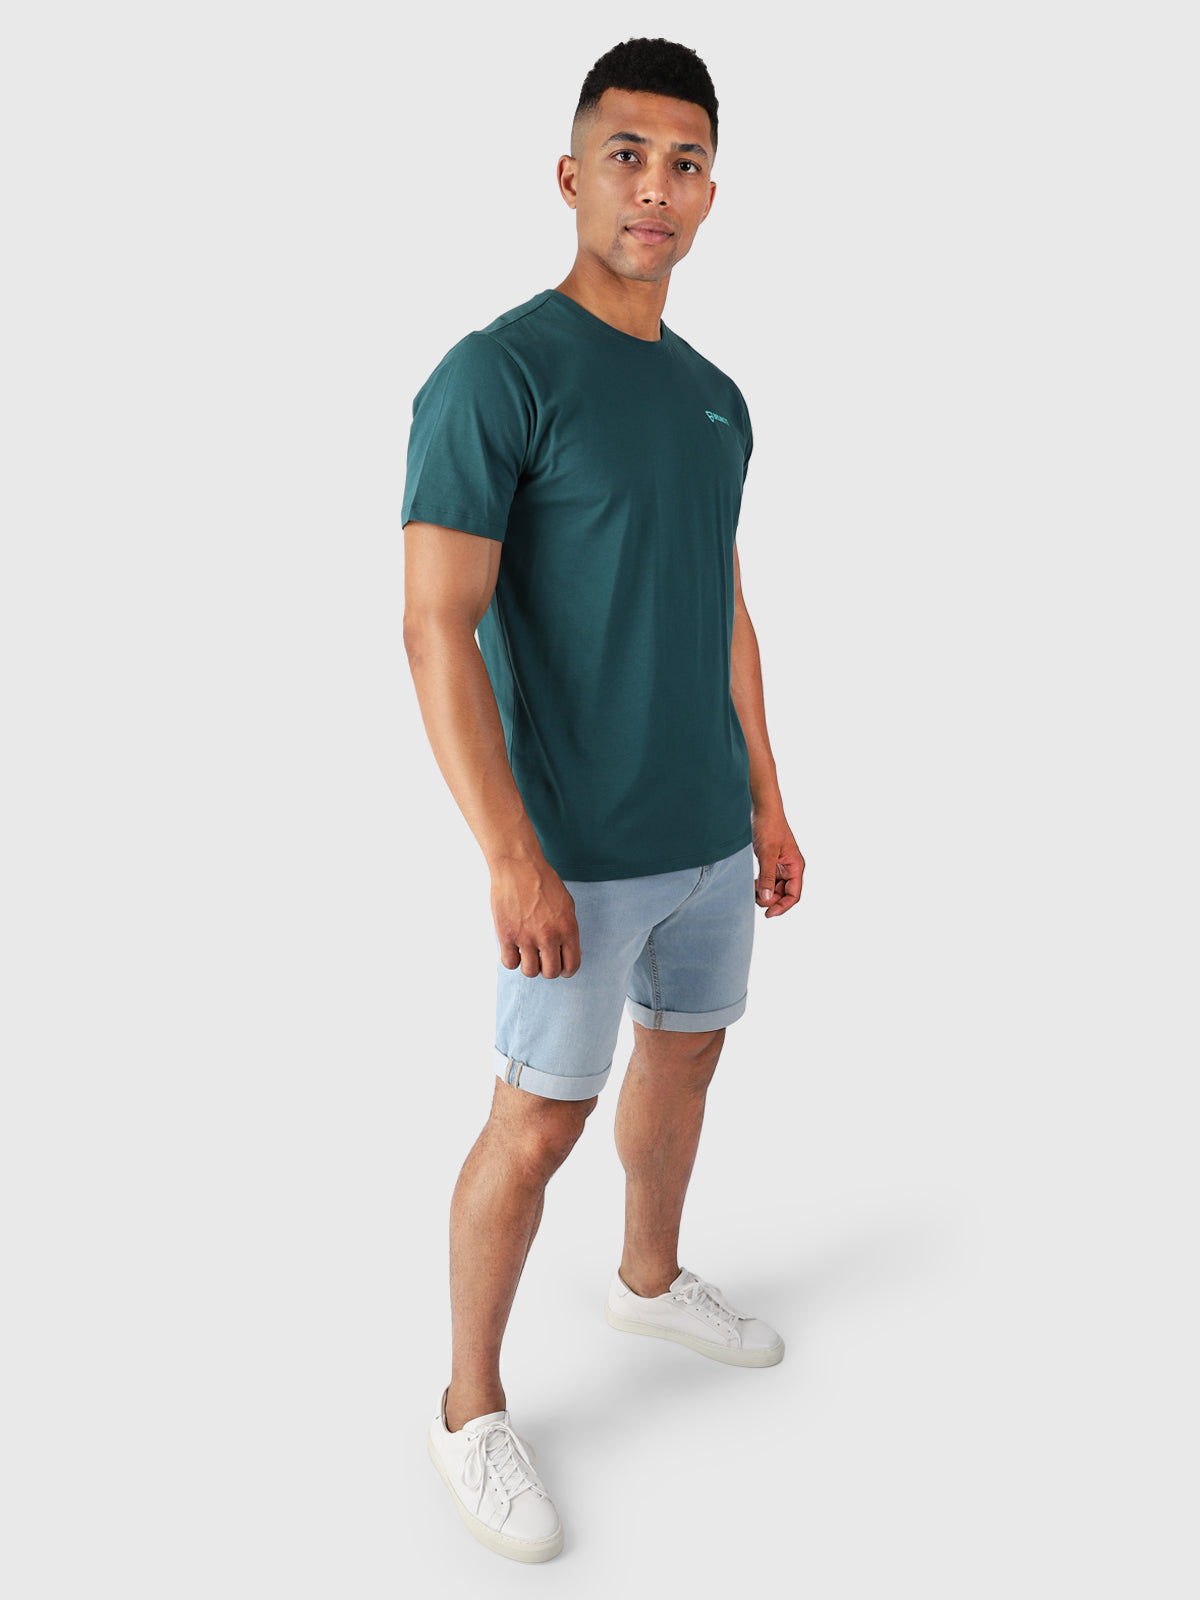 Birrie-R Herren T-Shirt | Grün